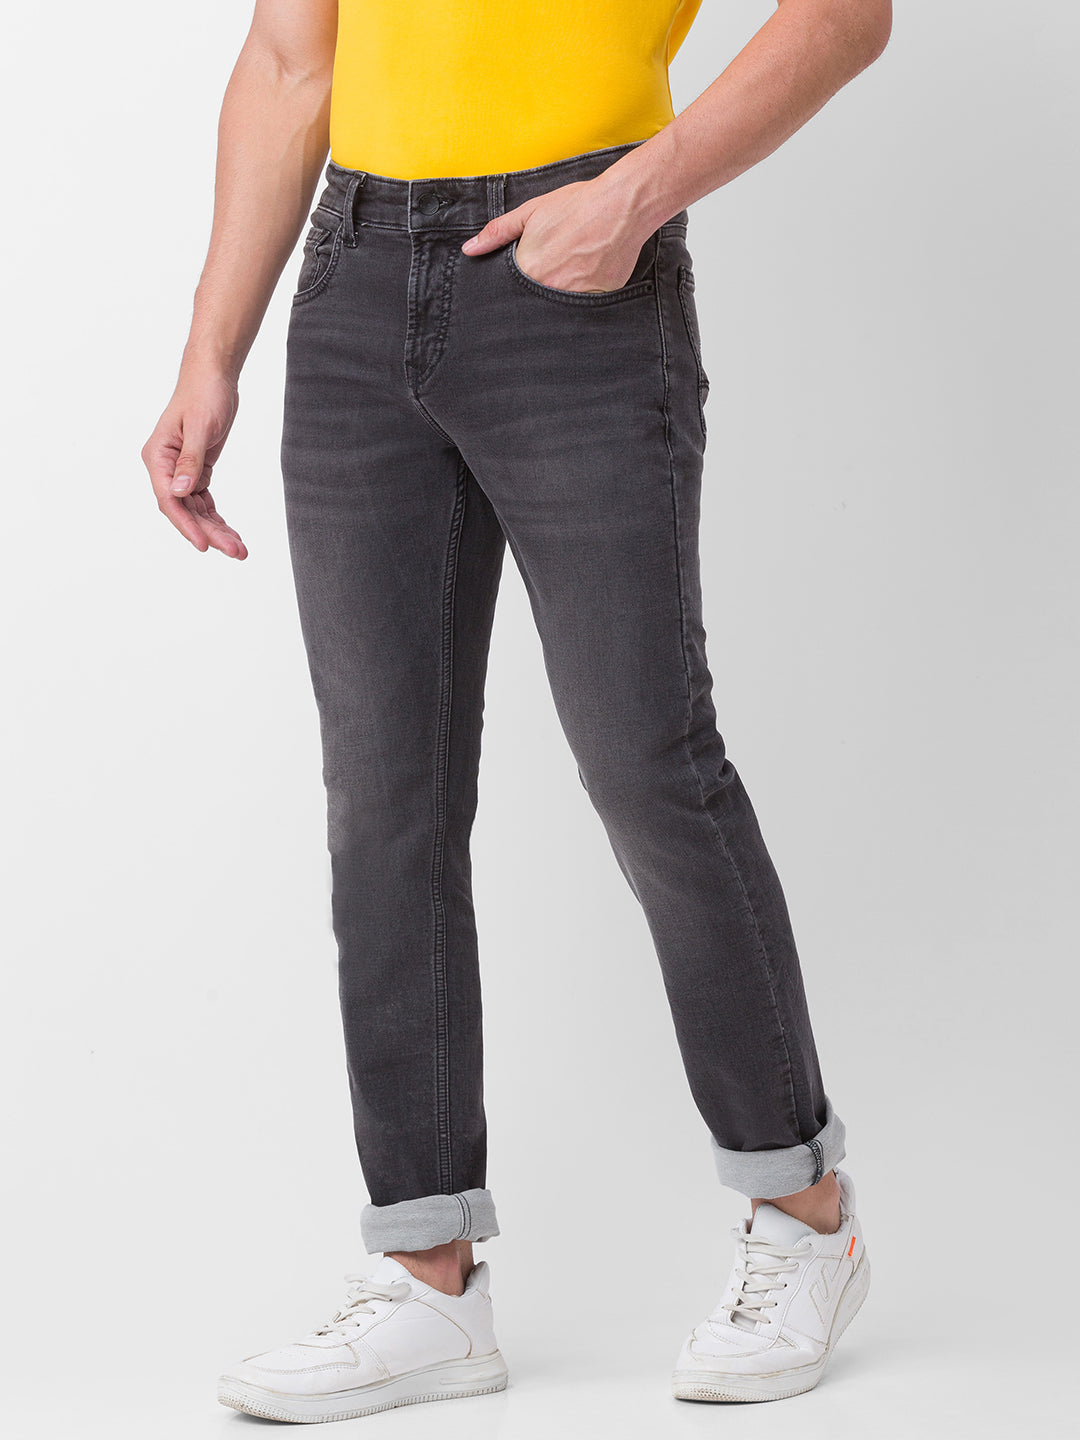 Spykar Grey Cotton Regular Fit Narrow Length Jeans For Men (Rover)